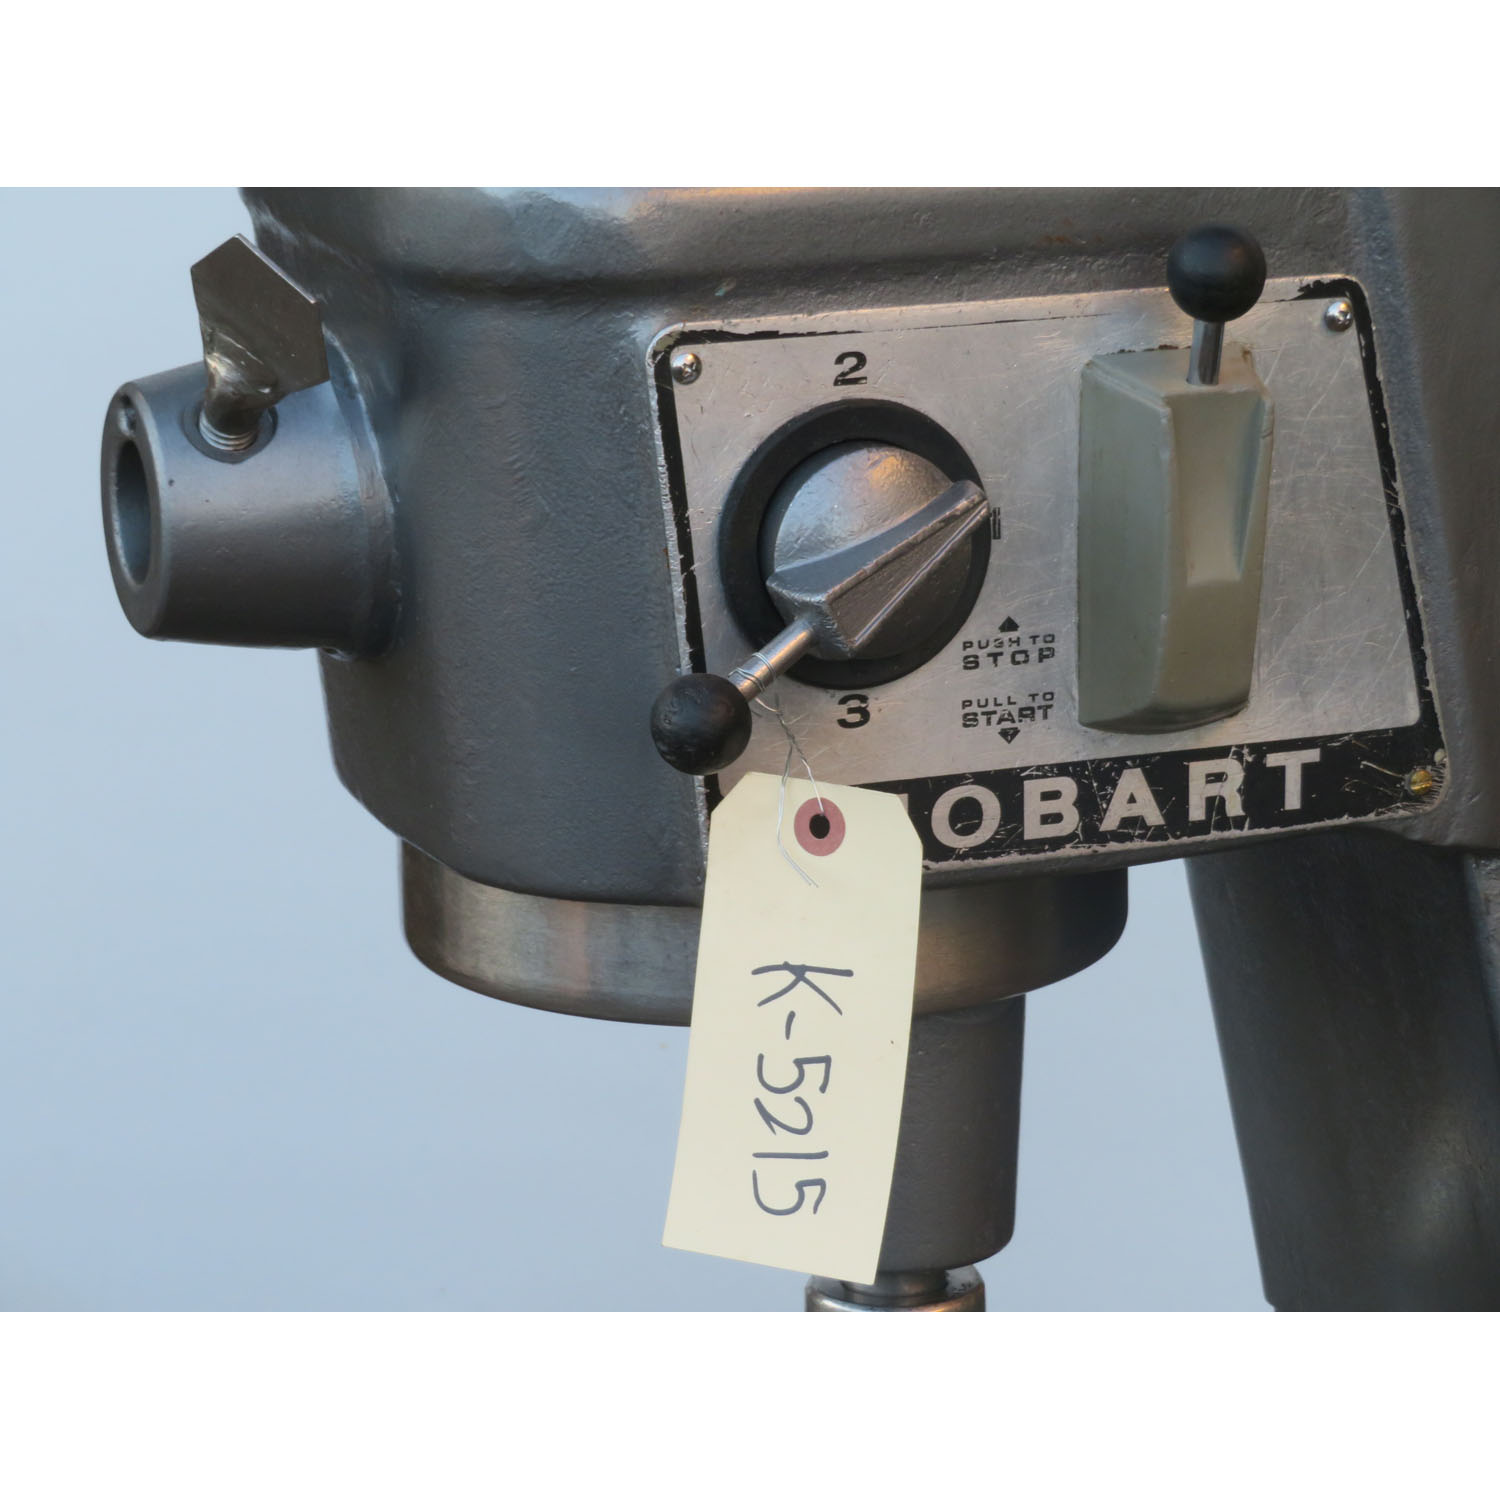 Hobart 30 Quart D300 Mixer, Used Excellent Condition image 1